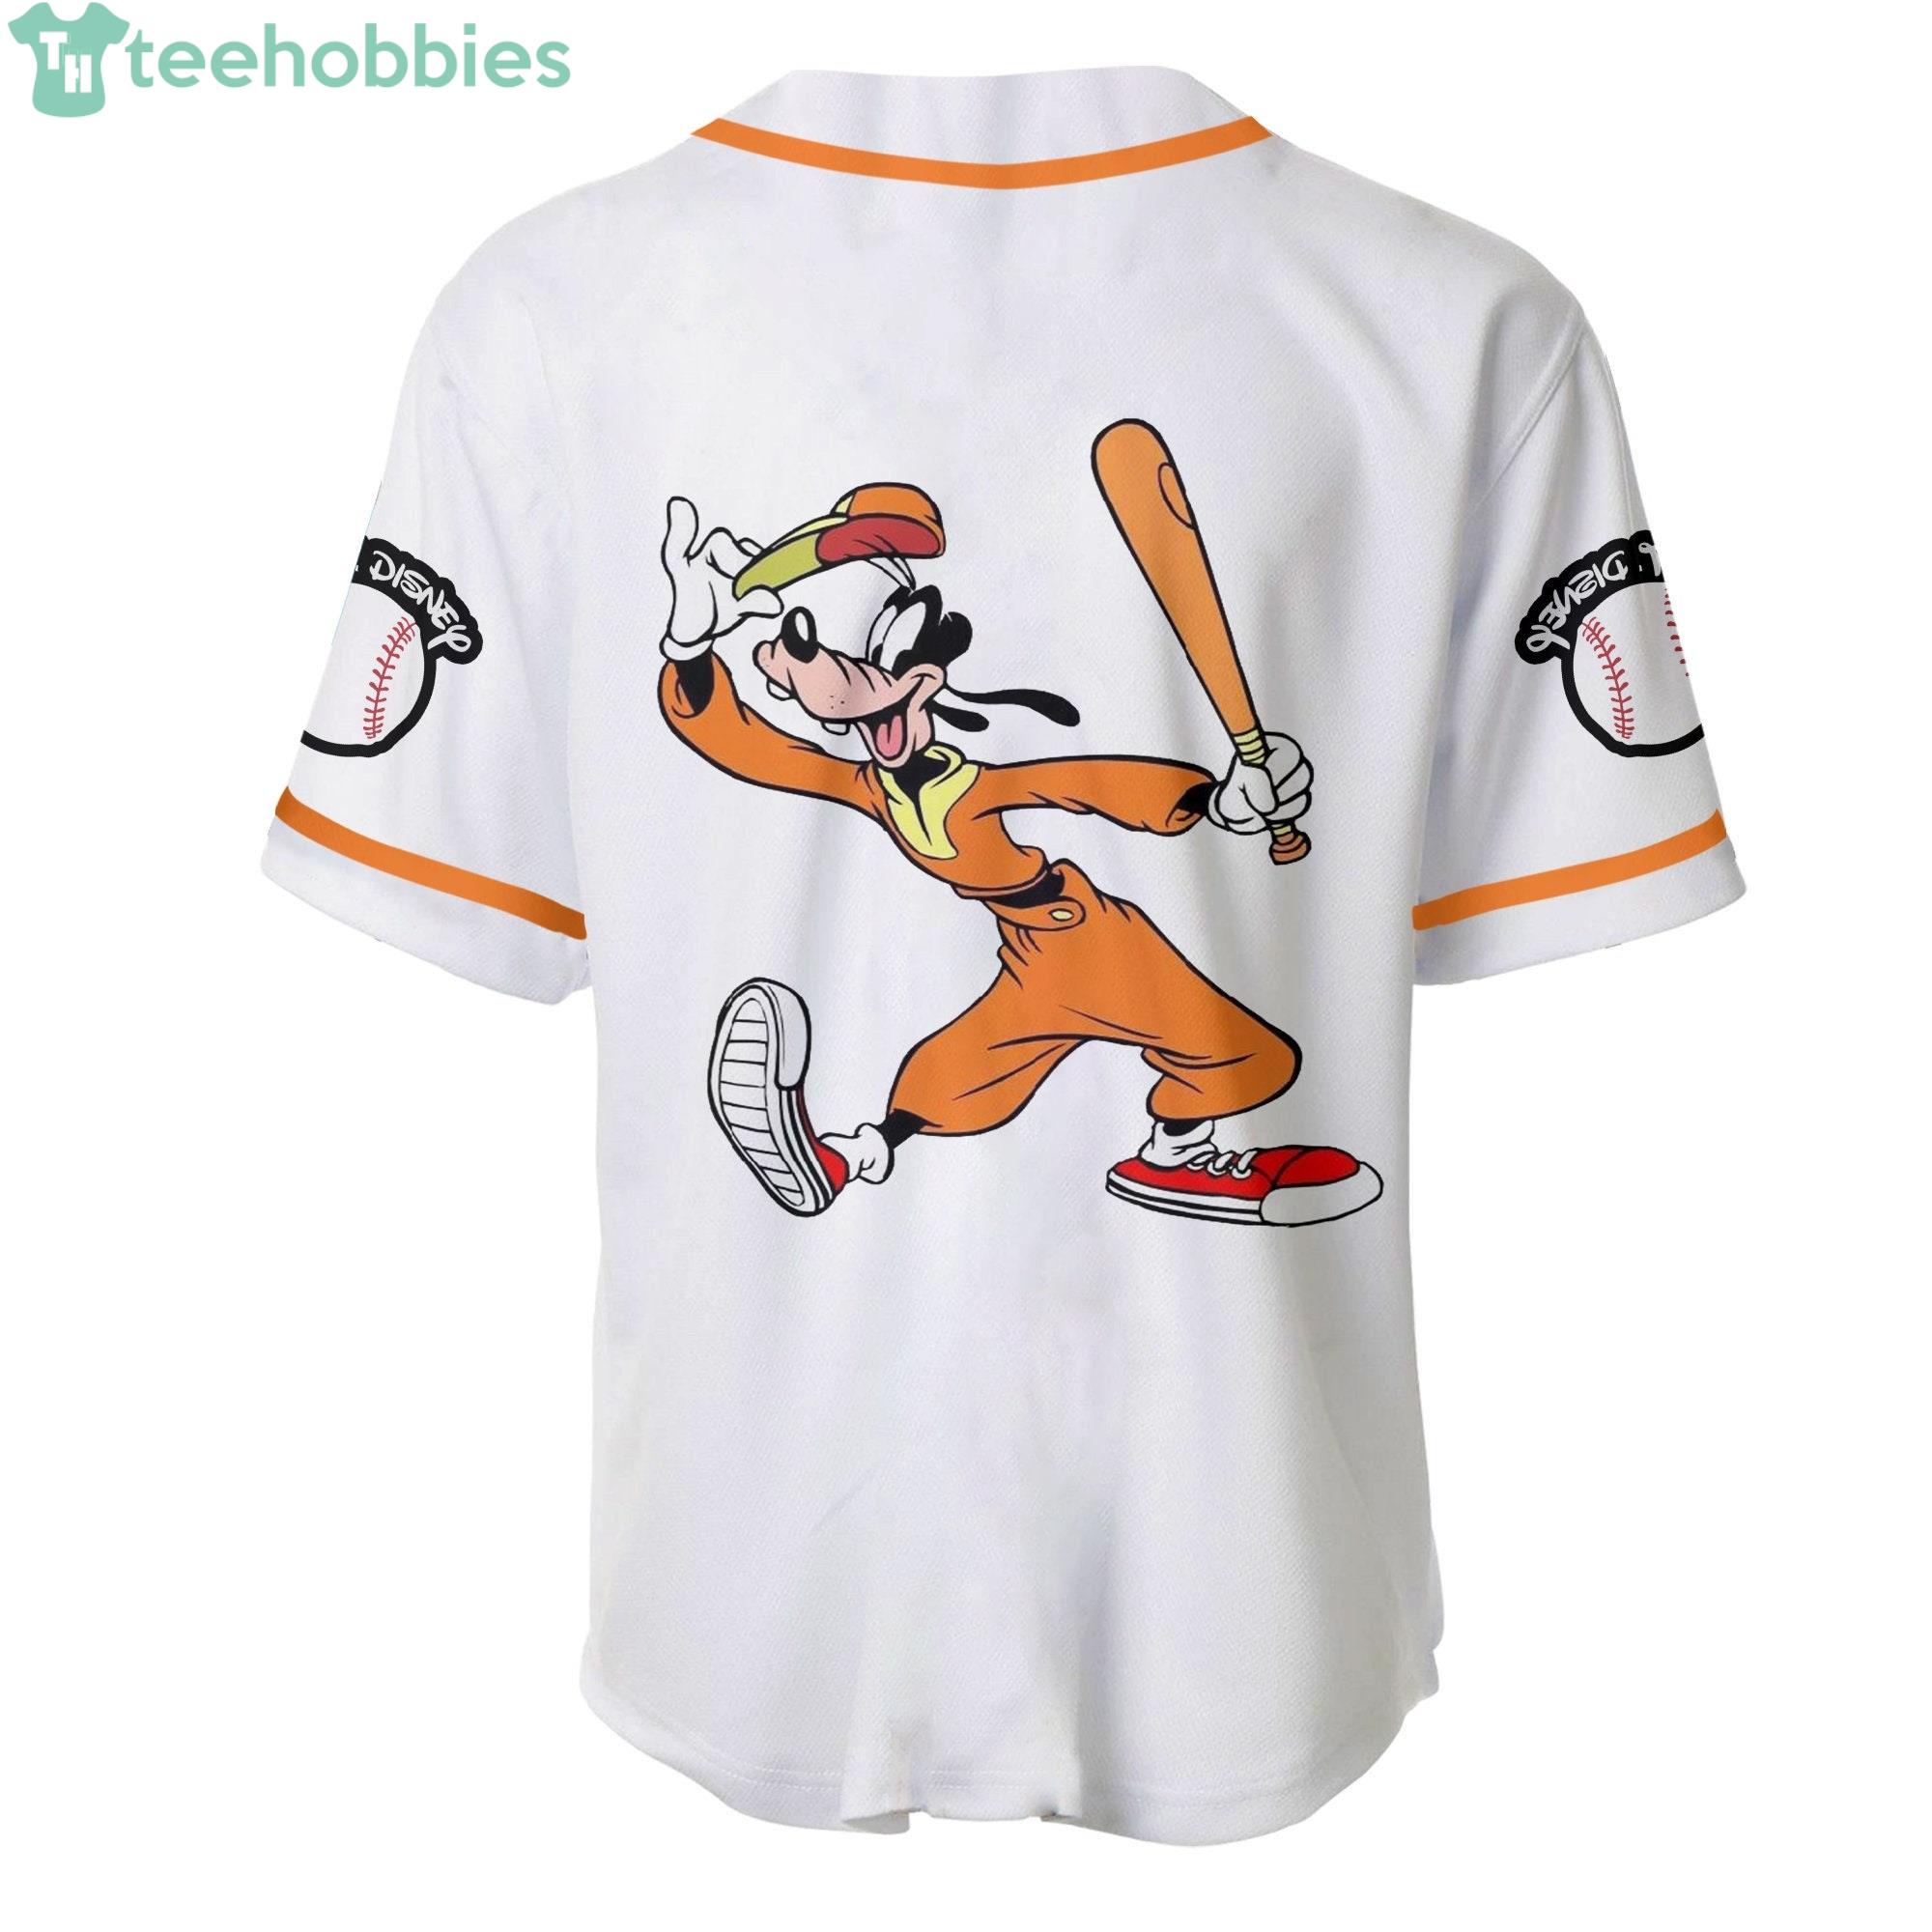 Custom Name Grey Orange White Baseball Jerseys Shirt - Freedomdesign